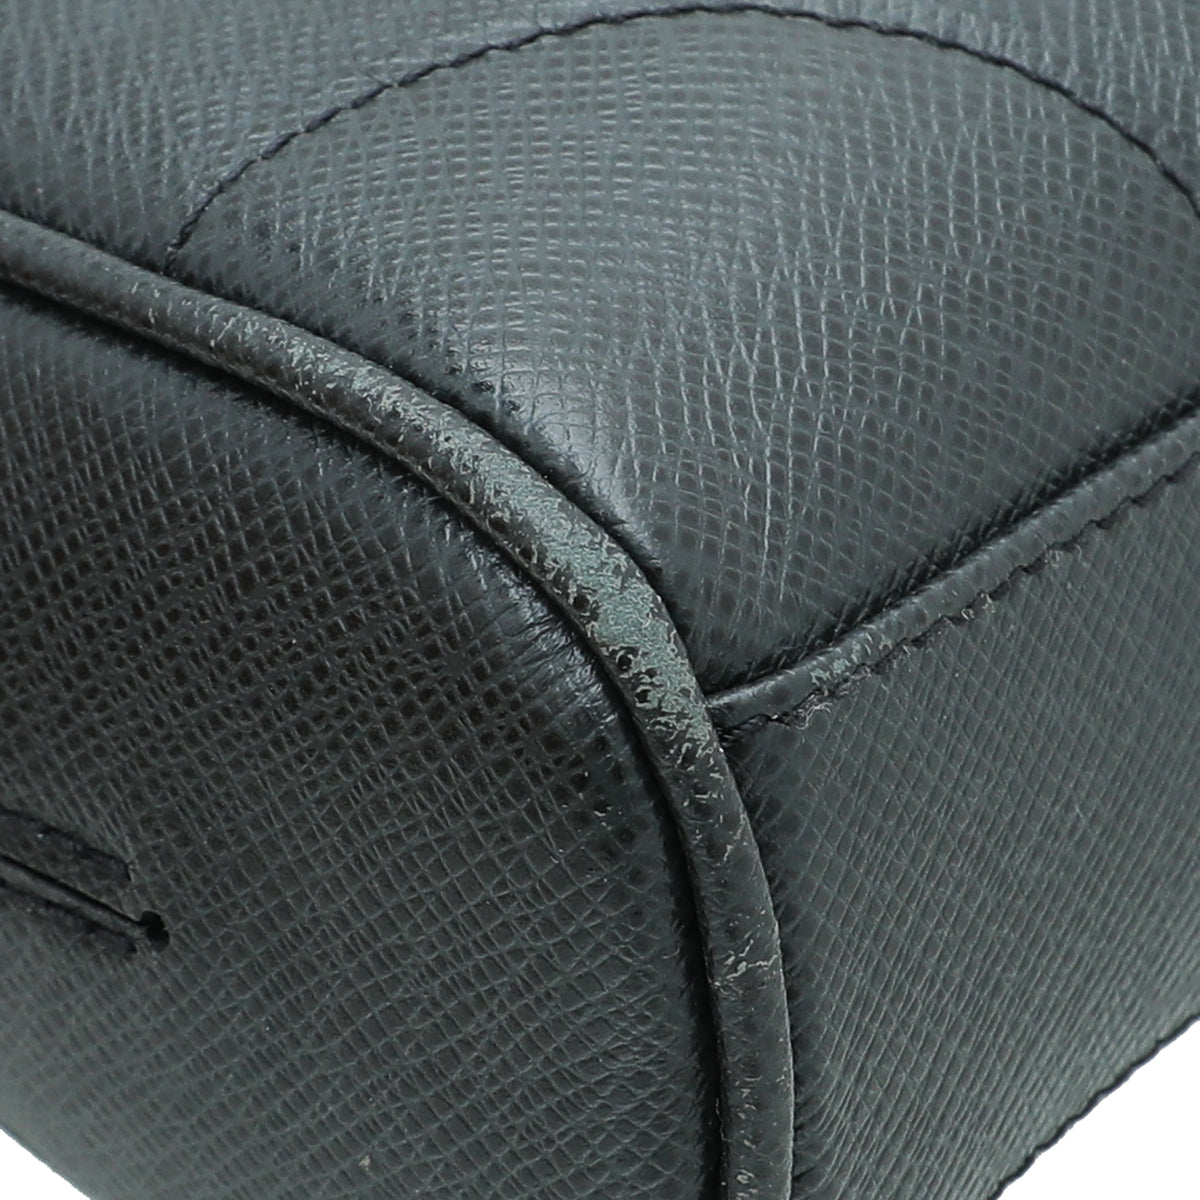 Louis Vuitton Shoulder Bag in Black Taiga Leather